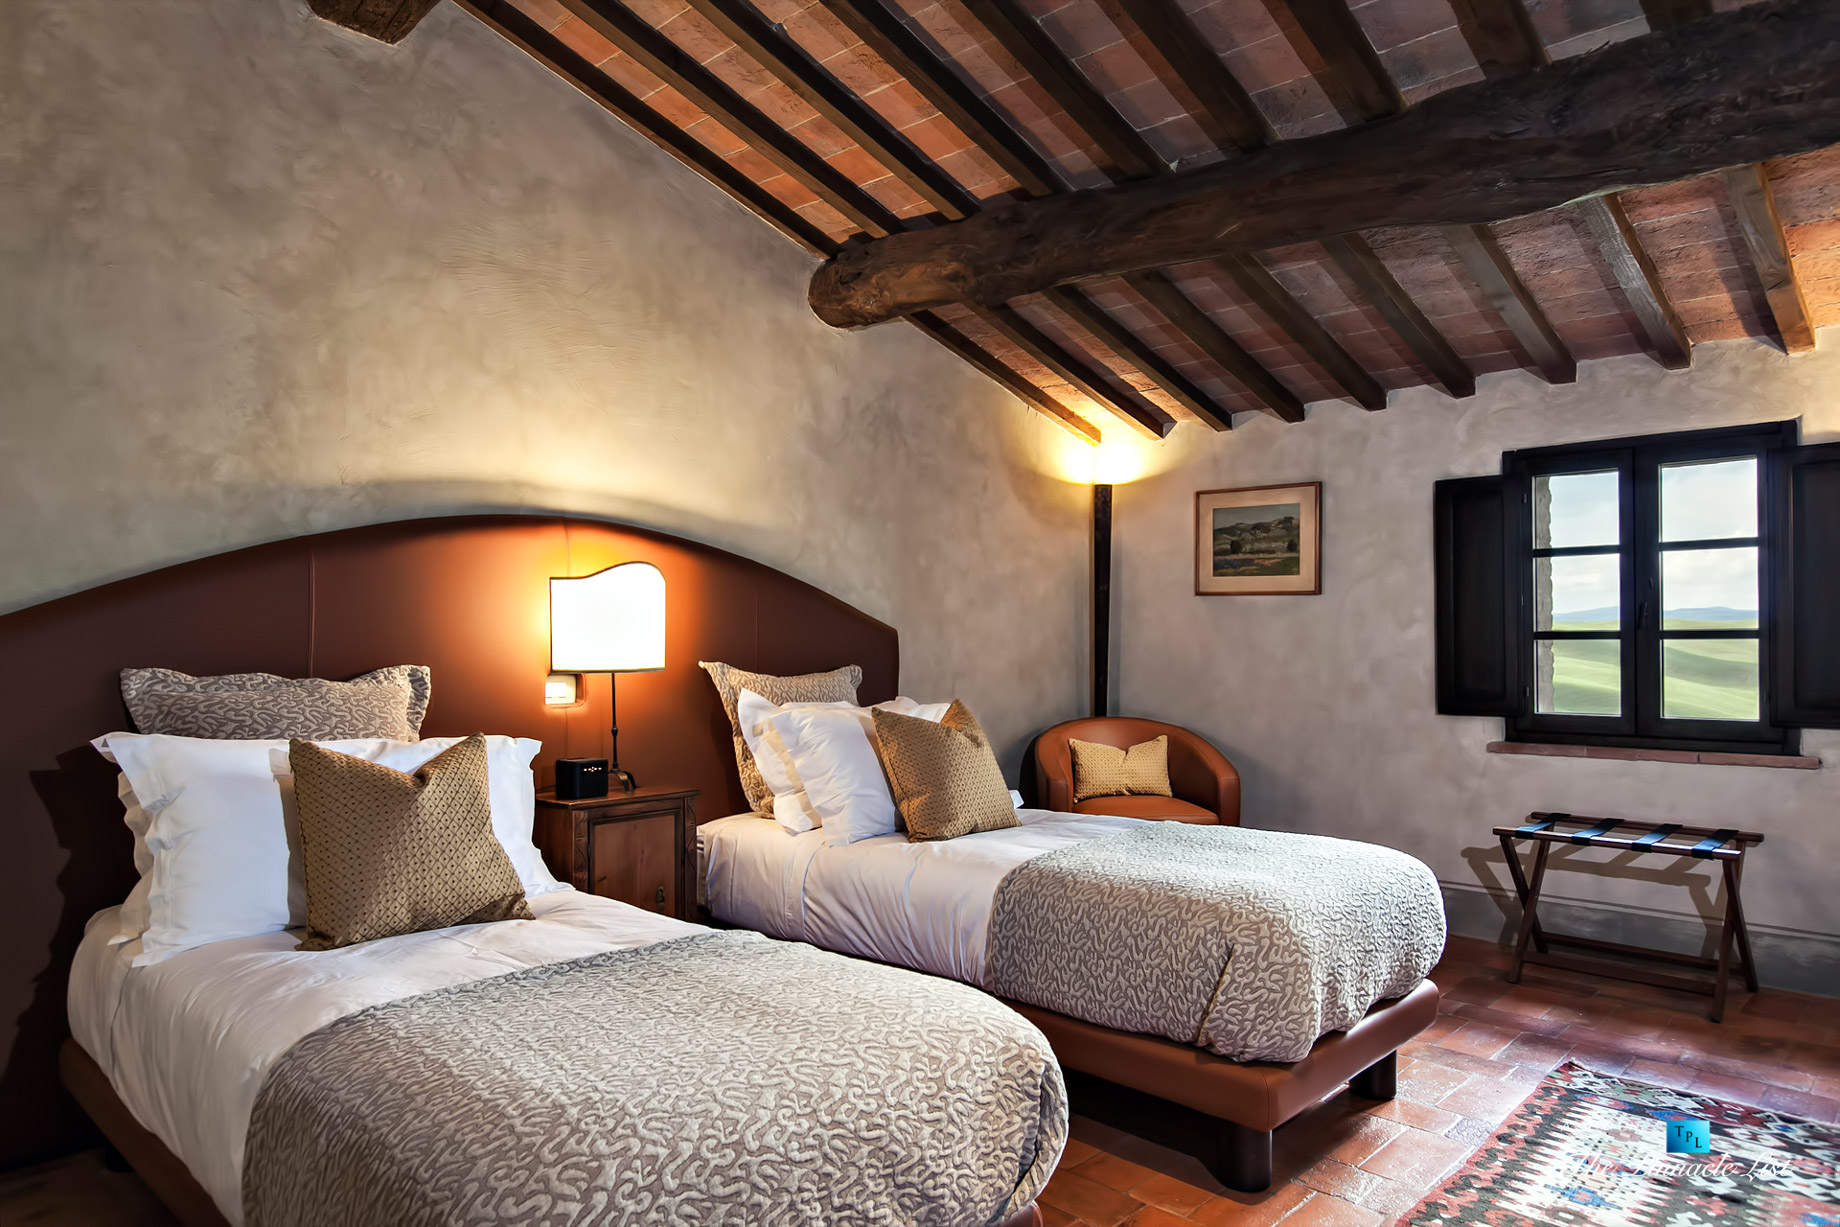 Podere Paníco Estate – Monteroni d’Arbia, Tuscany, Italy – Bedroom Window View – Luxury Real Estate – Tuscan Villa